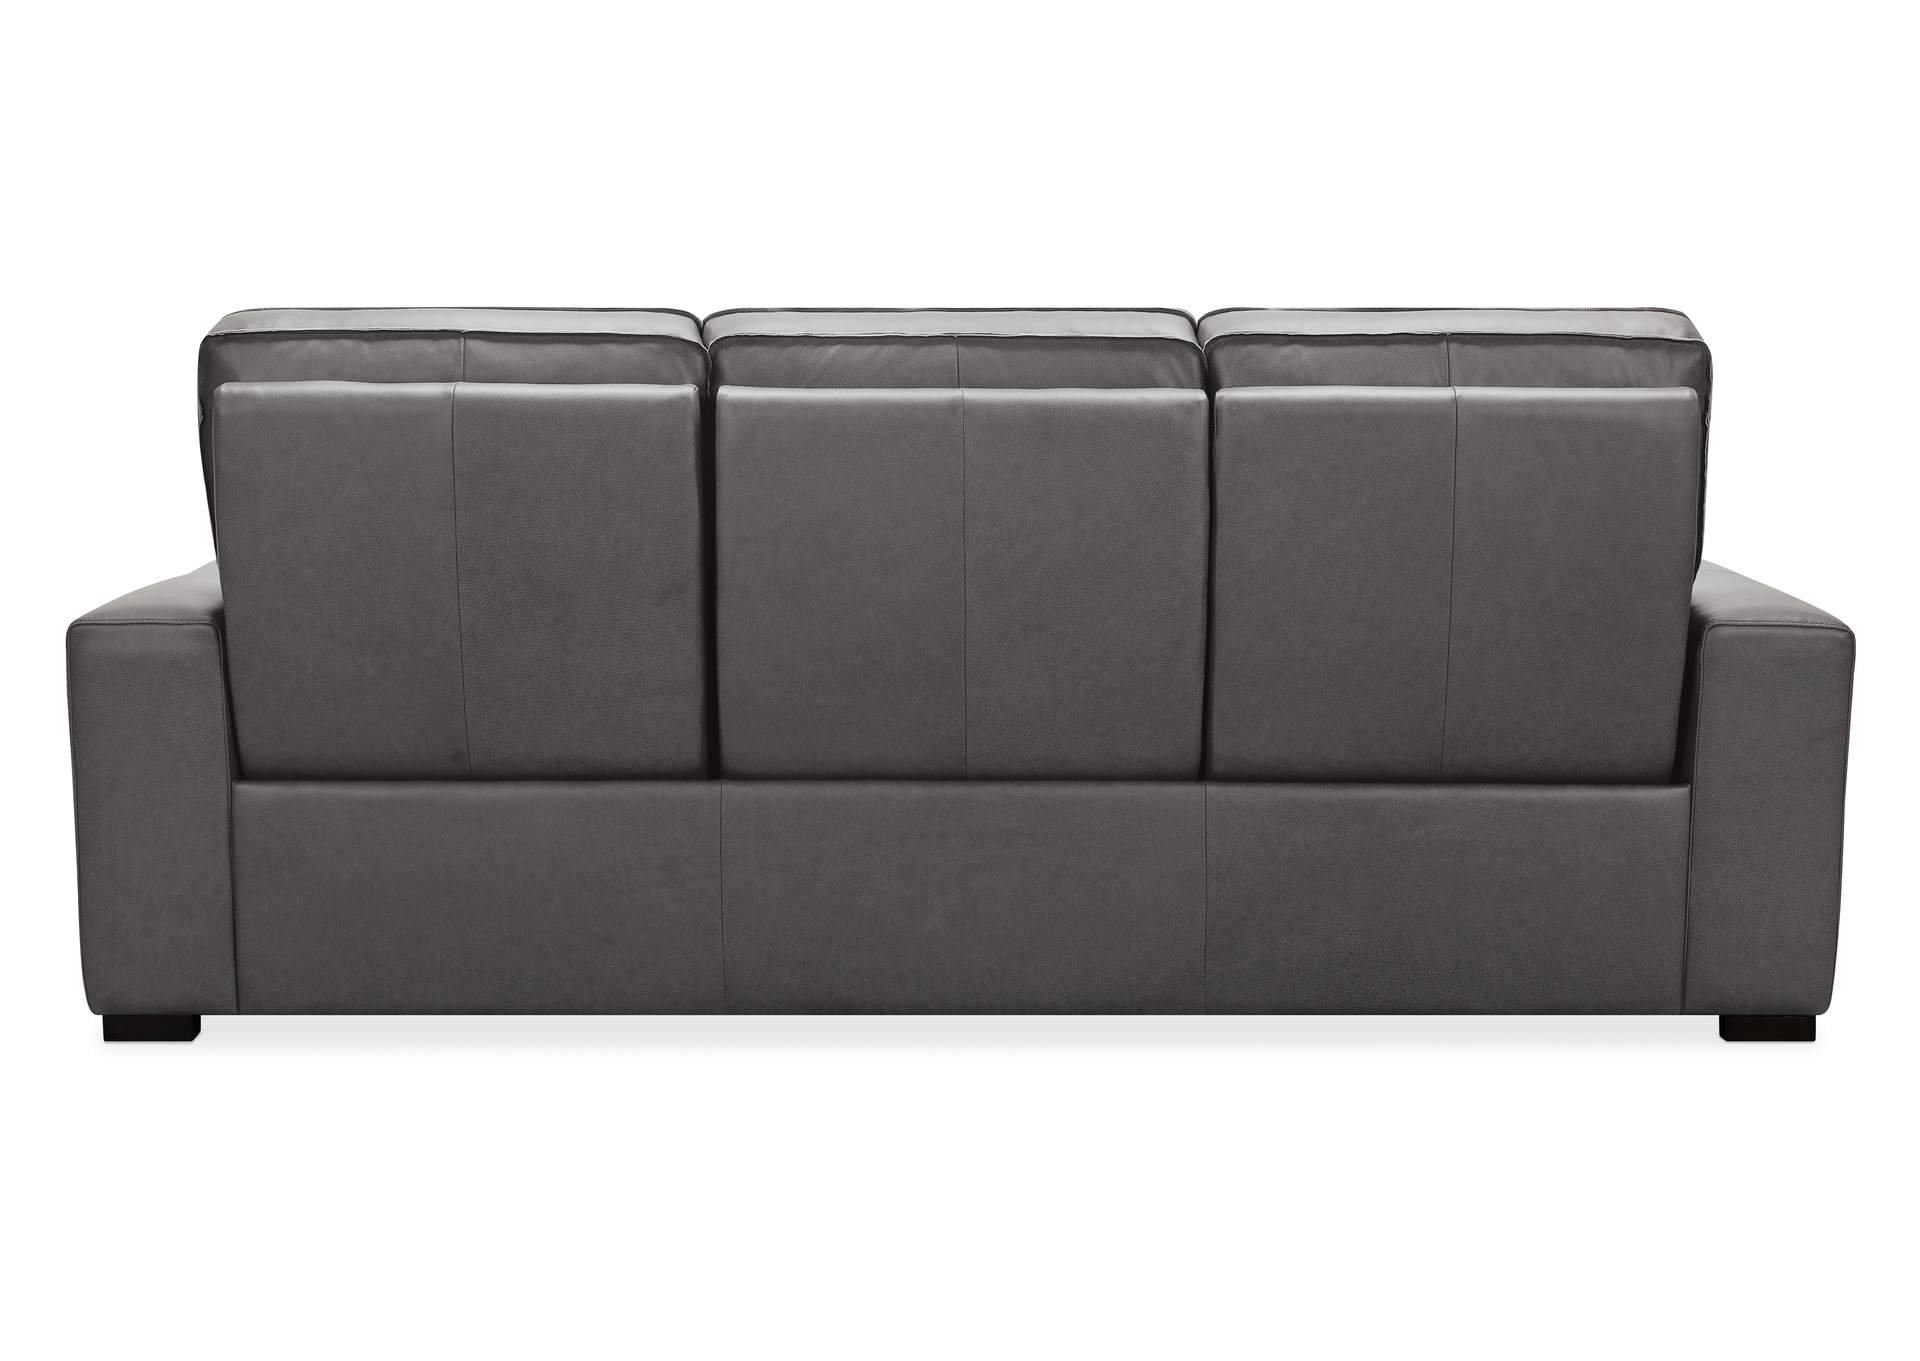 Braeburn Leather Sofa W - Power Recline Power Headrest,Hooker Furniture